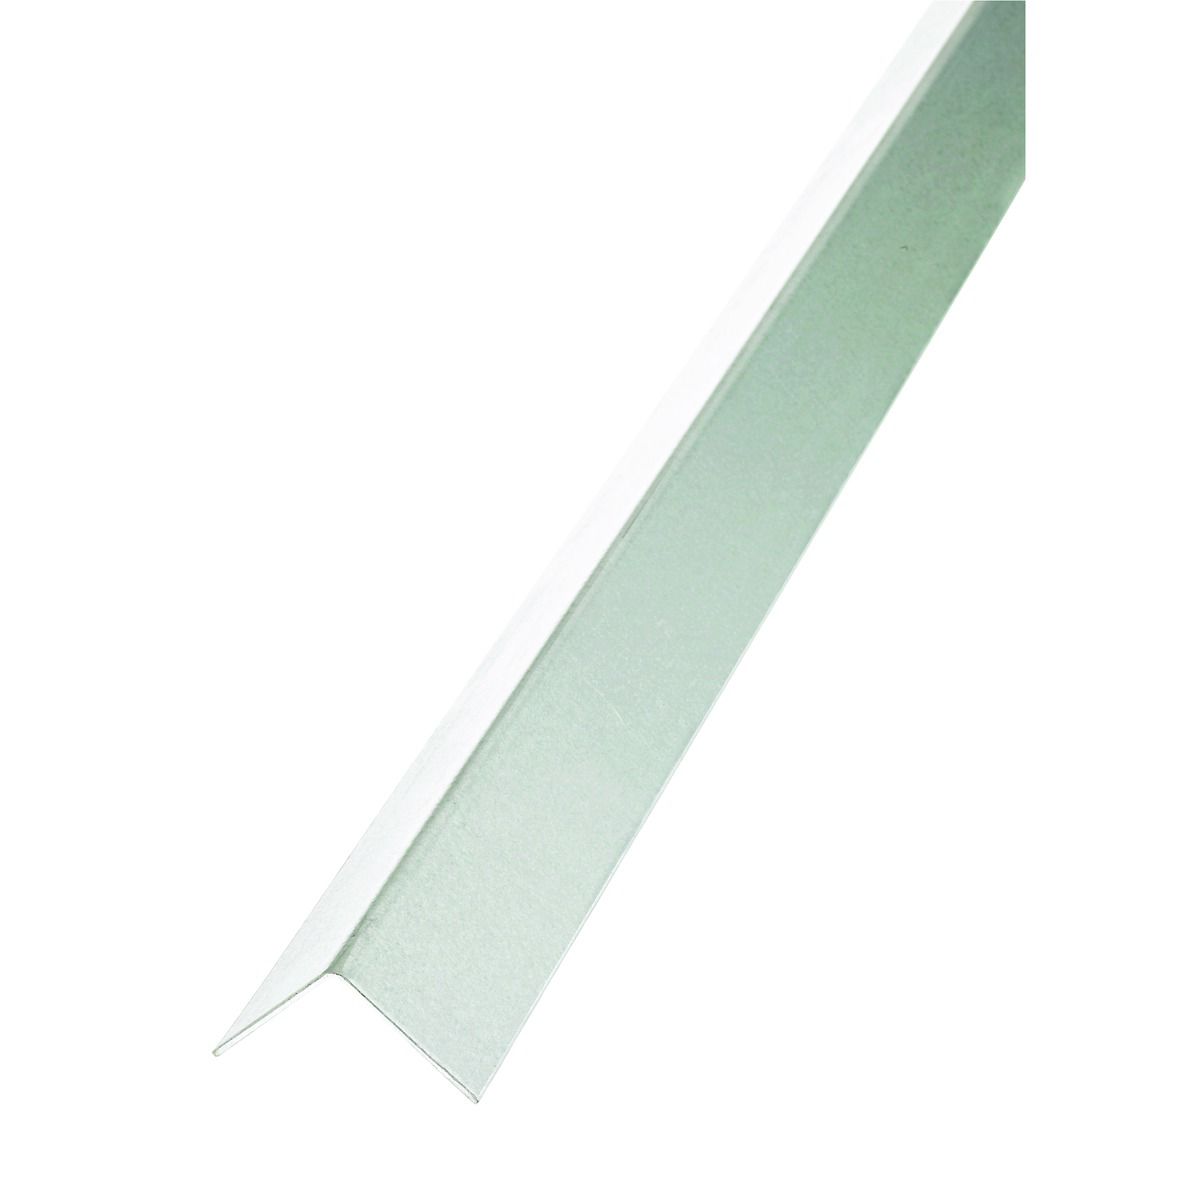 Image of Wickes 15.5mm Angle - Galvanised Steel 1m